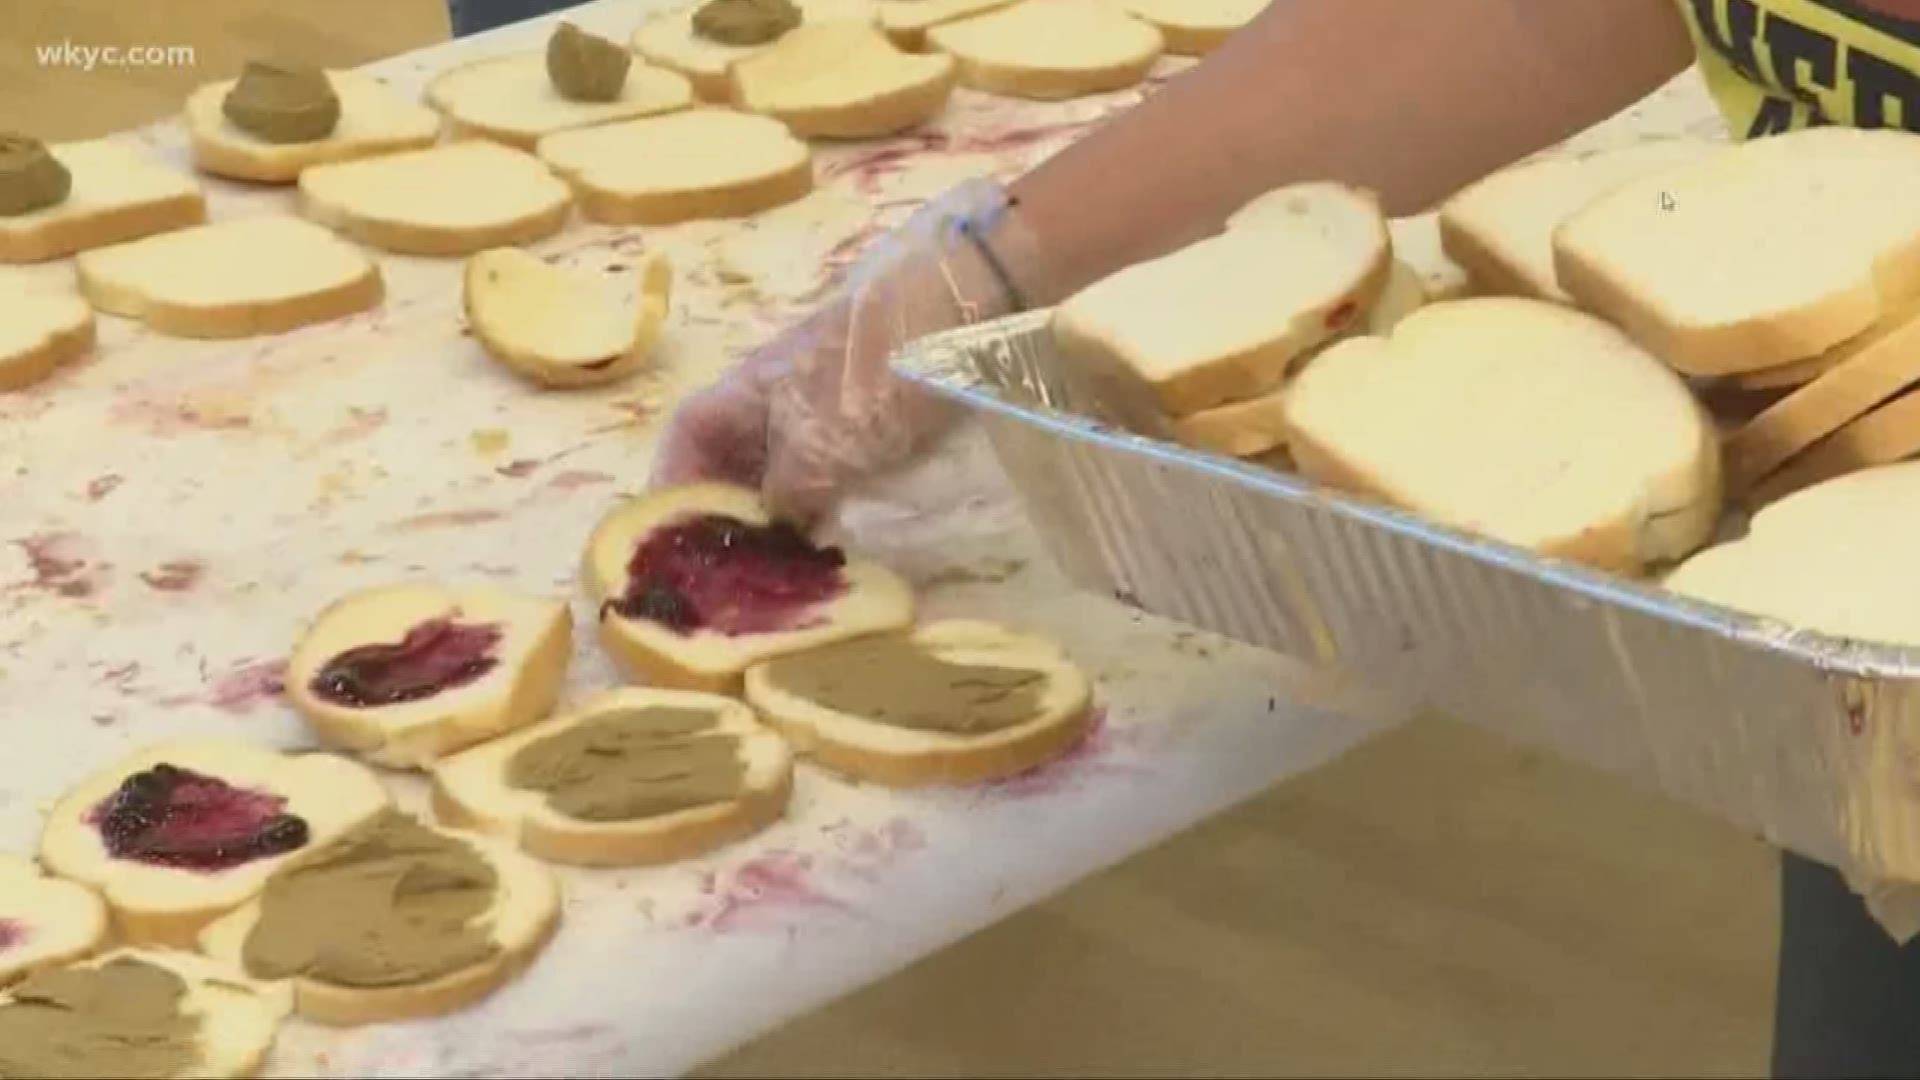 Beachwood HS students aim to make 40,000 sandwiches 